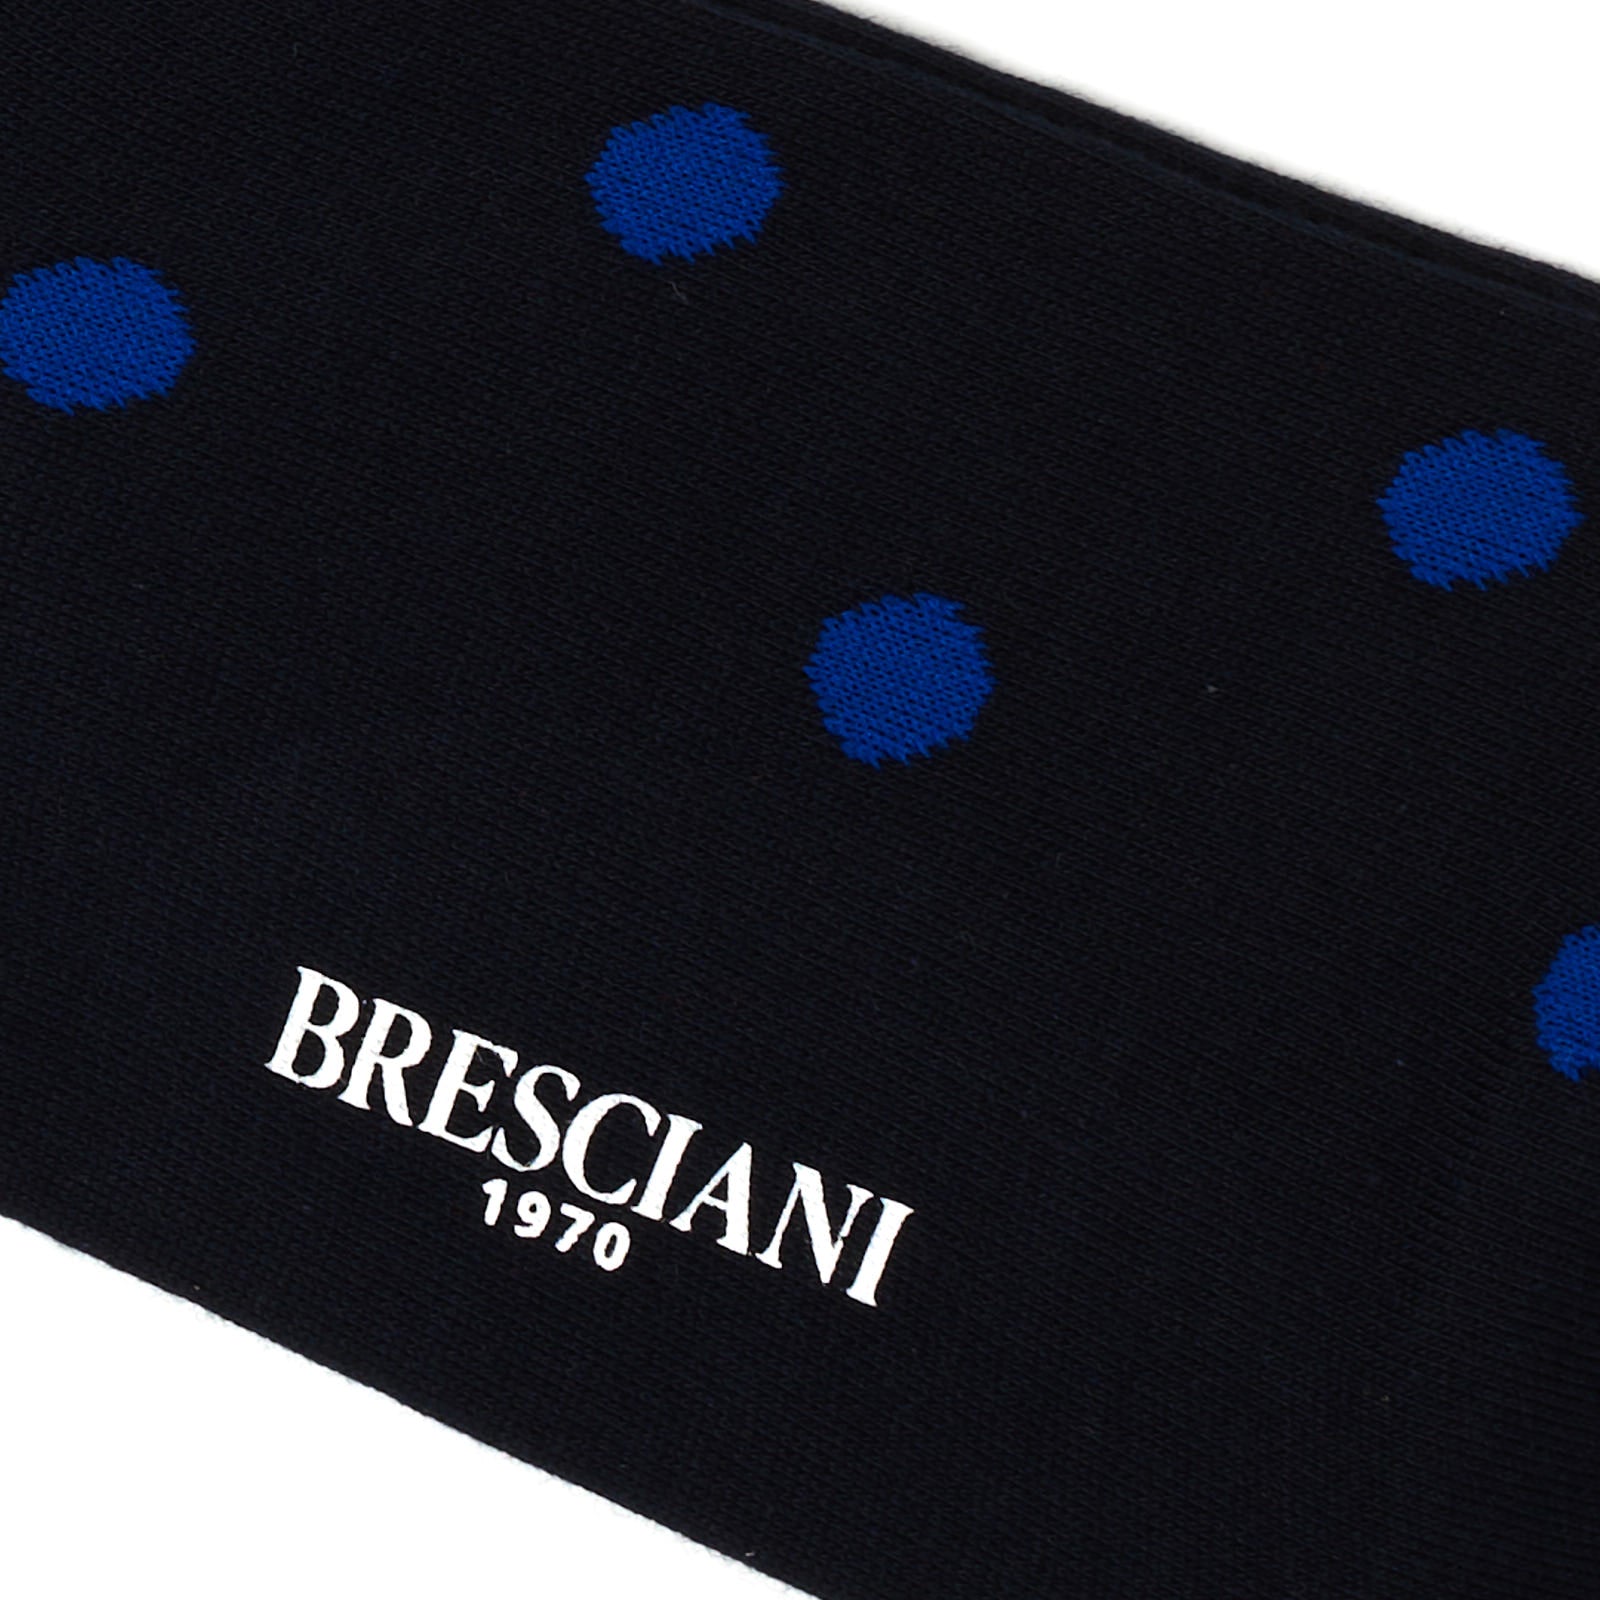 BRESCIANI Cotton Geometry Pattern Design Mid Calf Length Socks US M-L BRESCIANI